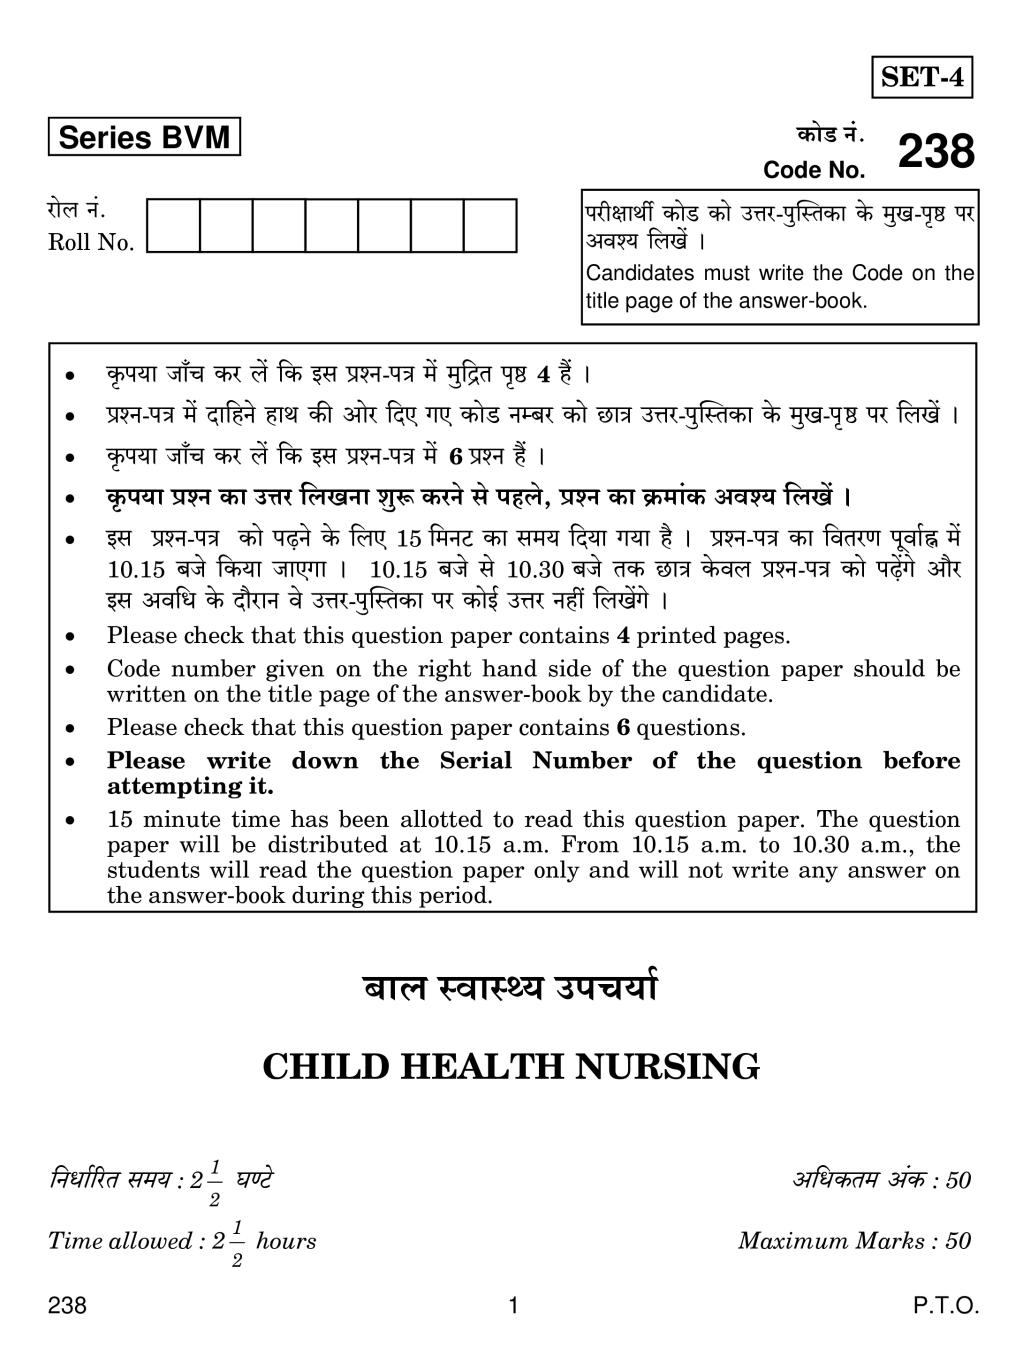 CBSE Class 12 Child Health Nursing Question Paper 2019 - Page 1